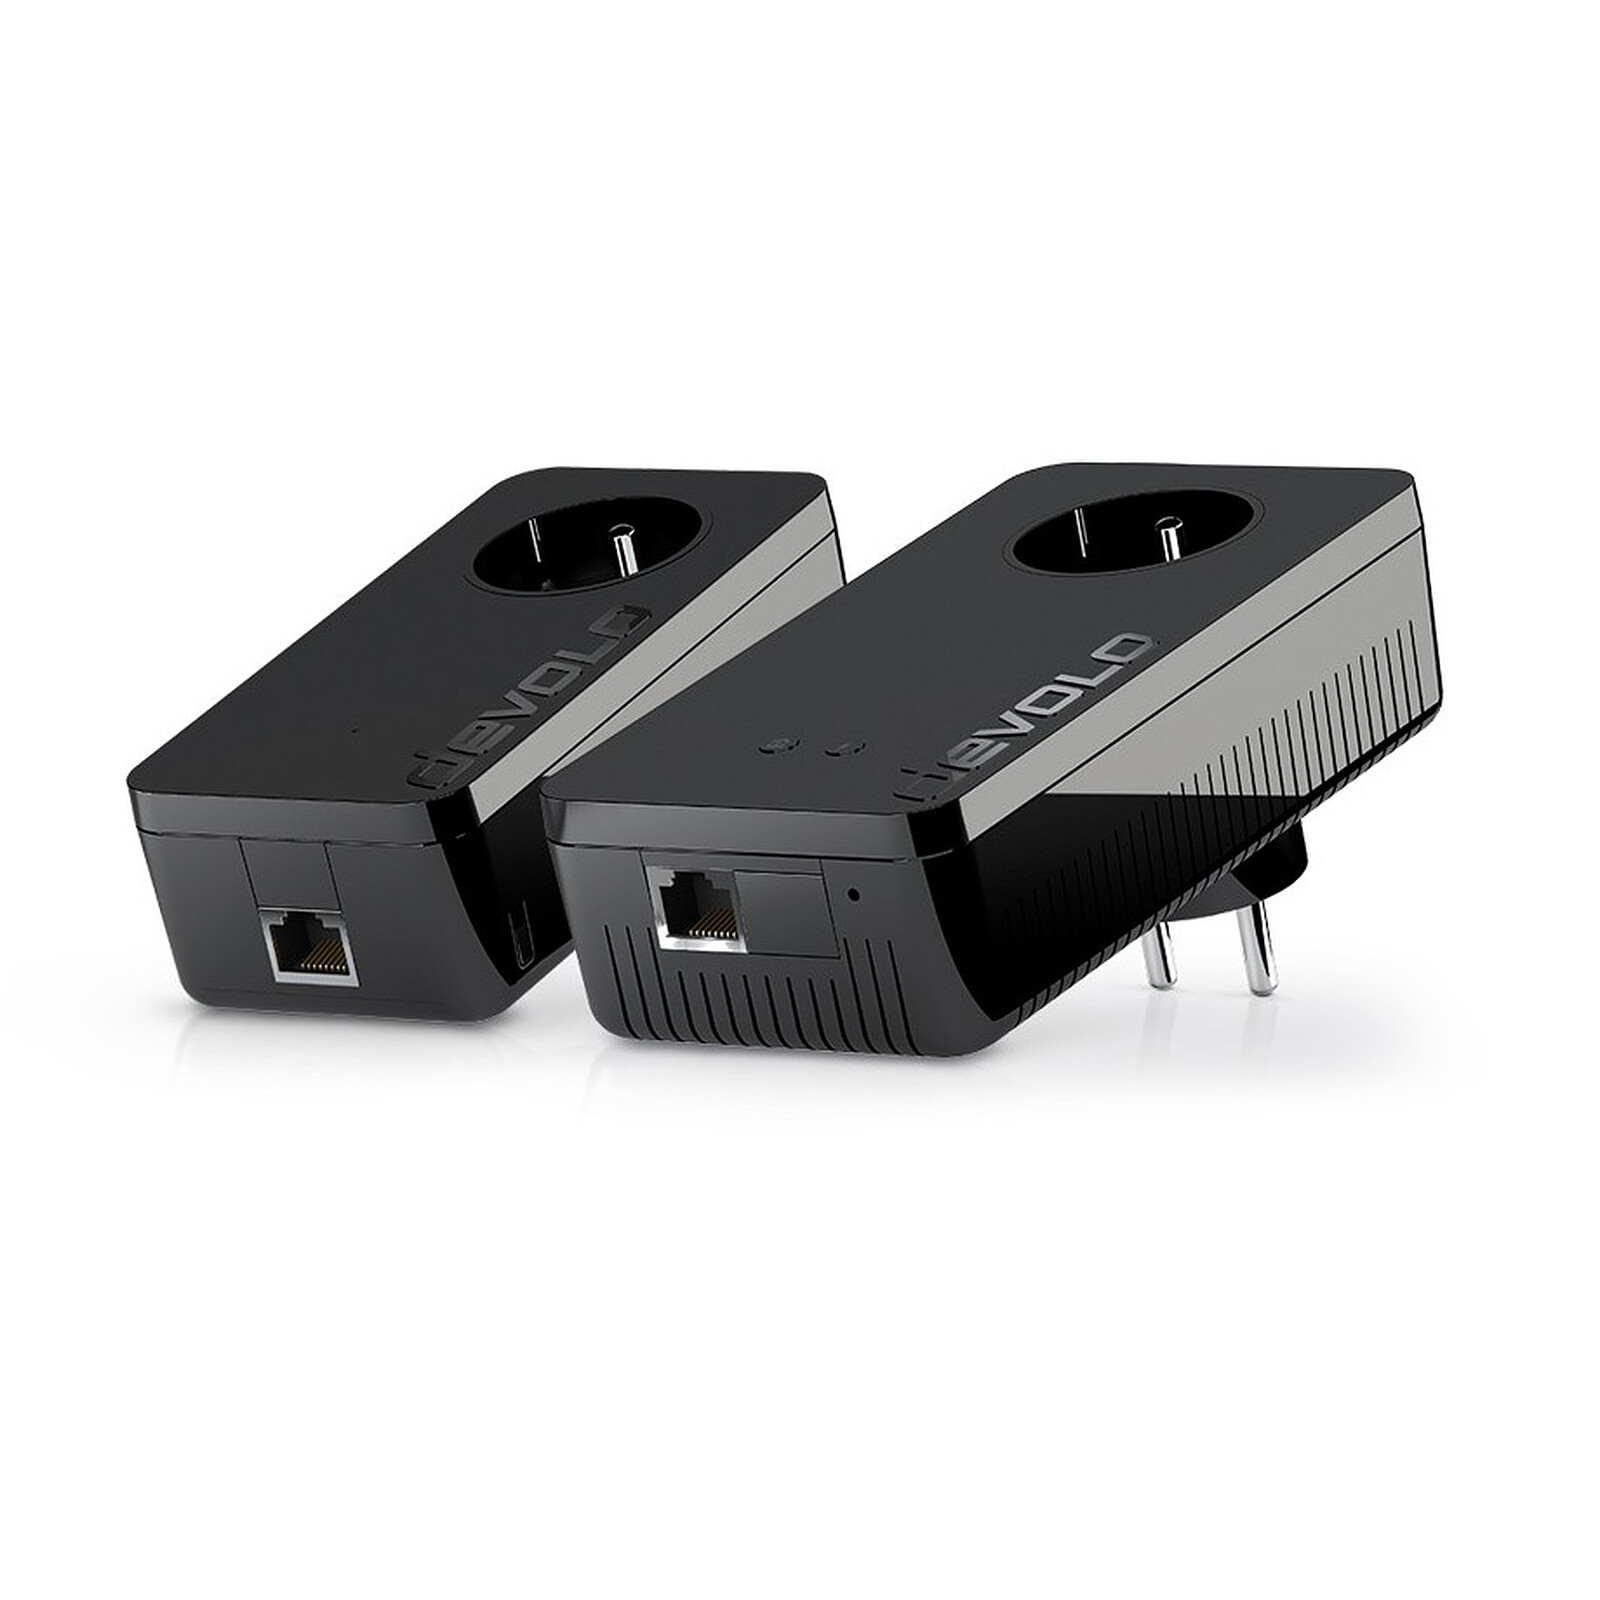 DEVOLO Pack de 3 Adaptateurs CPL dLAN 1200+ WiFi AC - Starter Kit - Pont -  GigE, HomePlug AV (HPAV) - Cdiscount Informatique